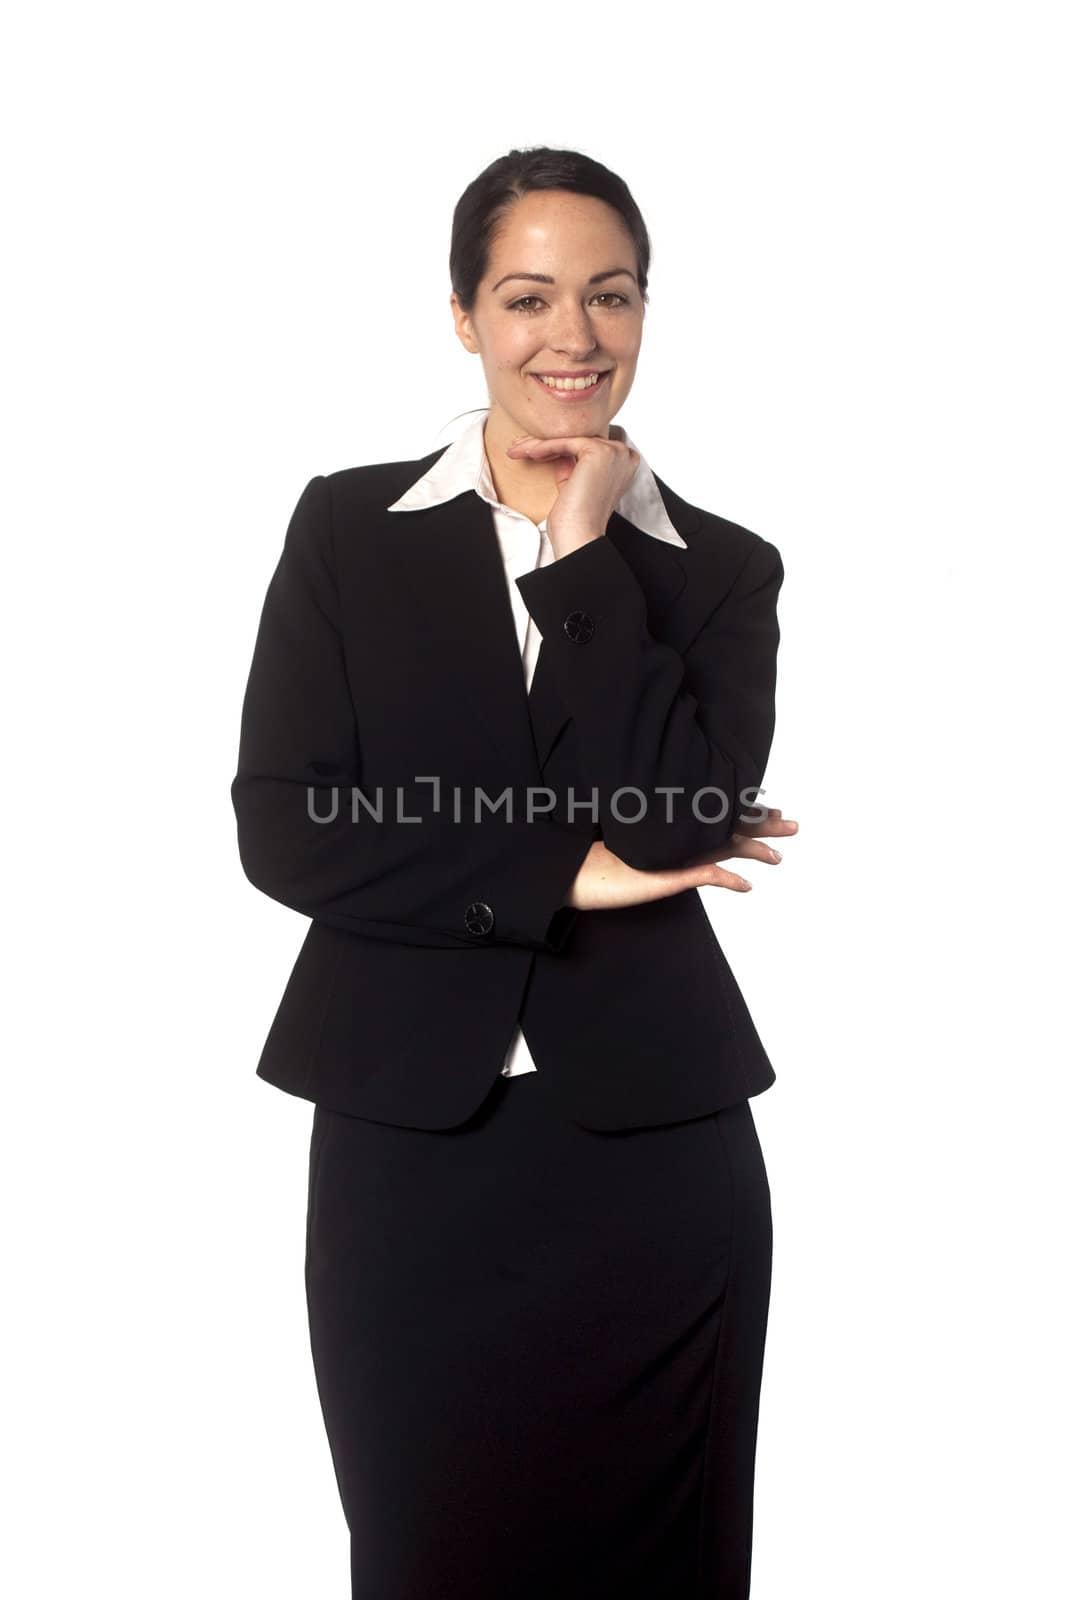 A confident business woman